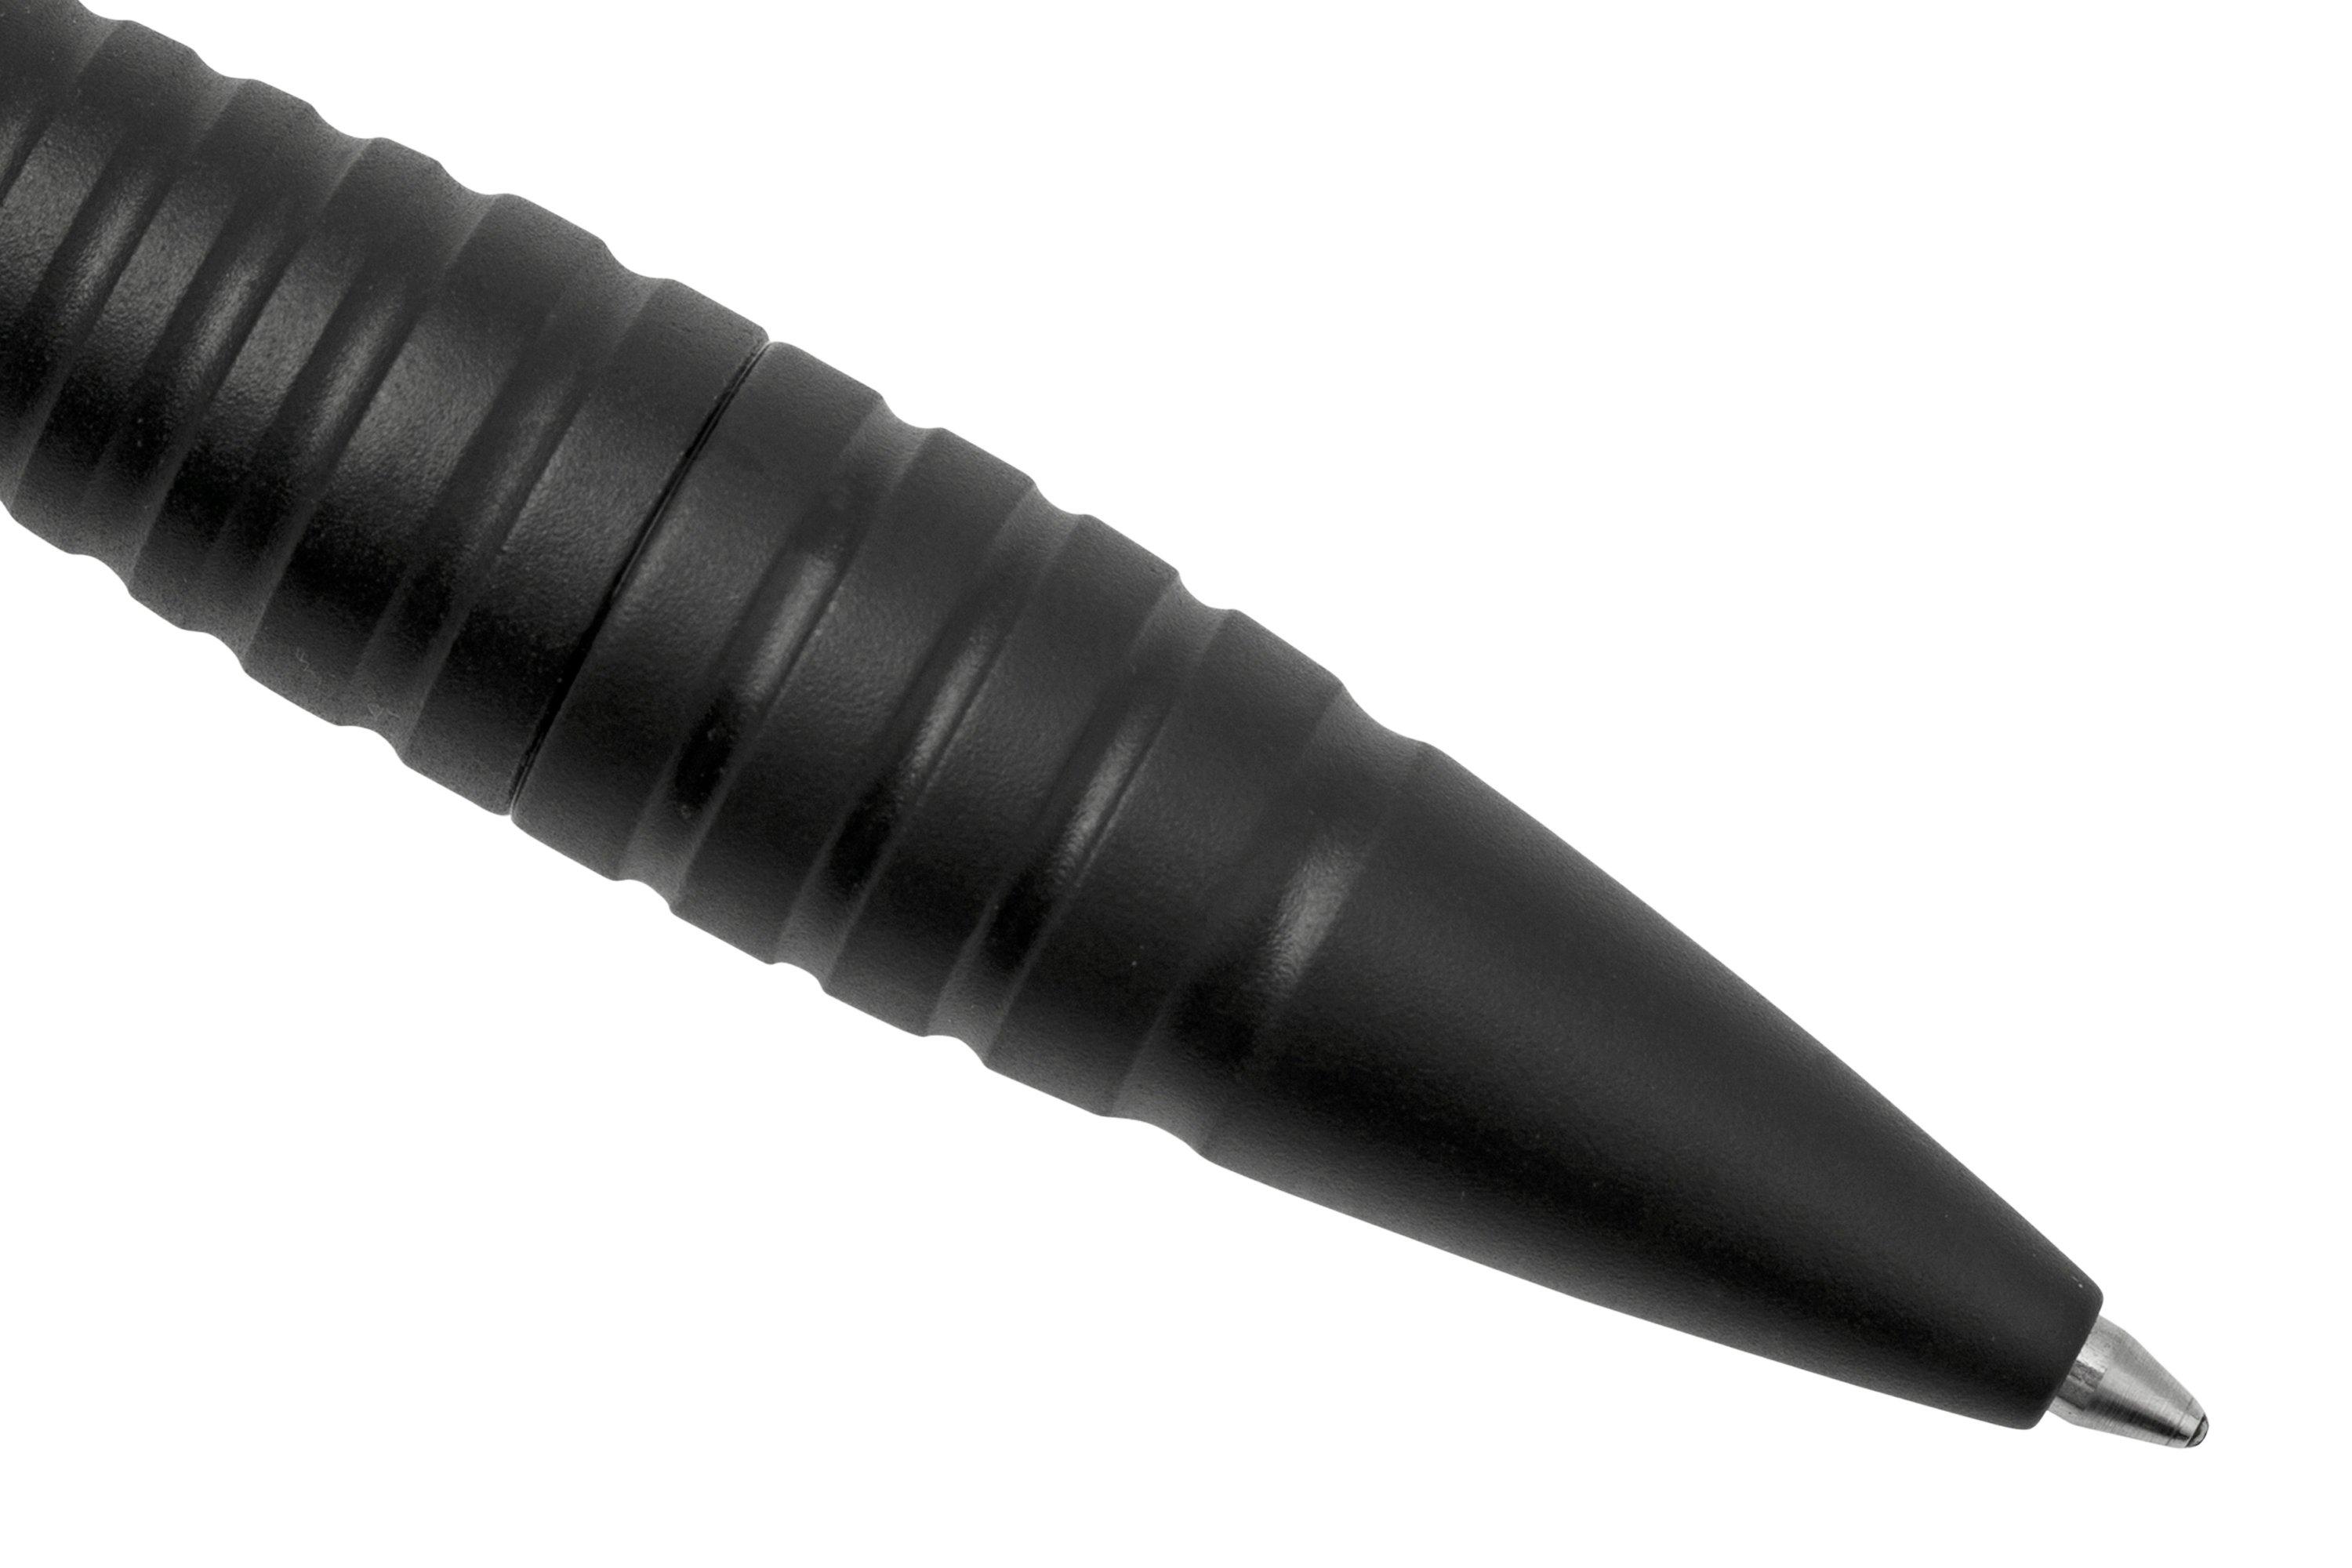 CRKT tactical pen designed by James Williams, black